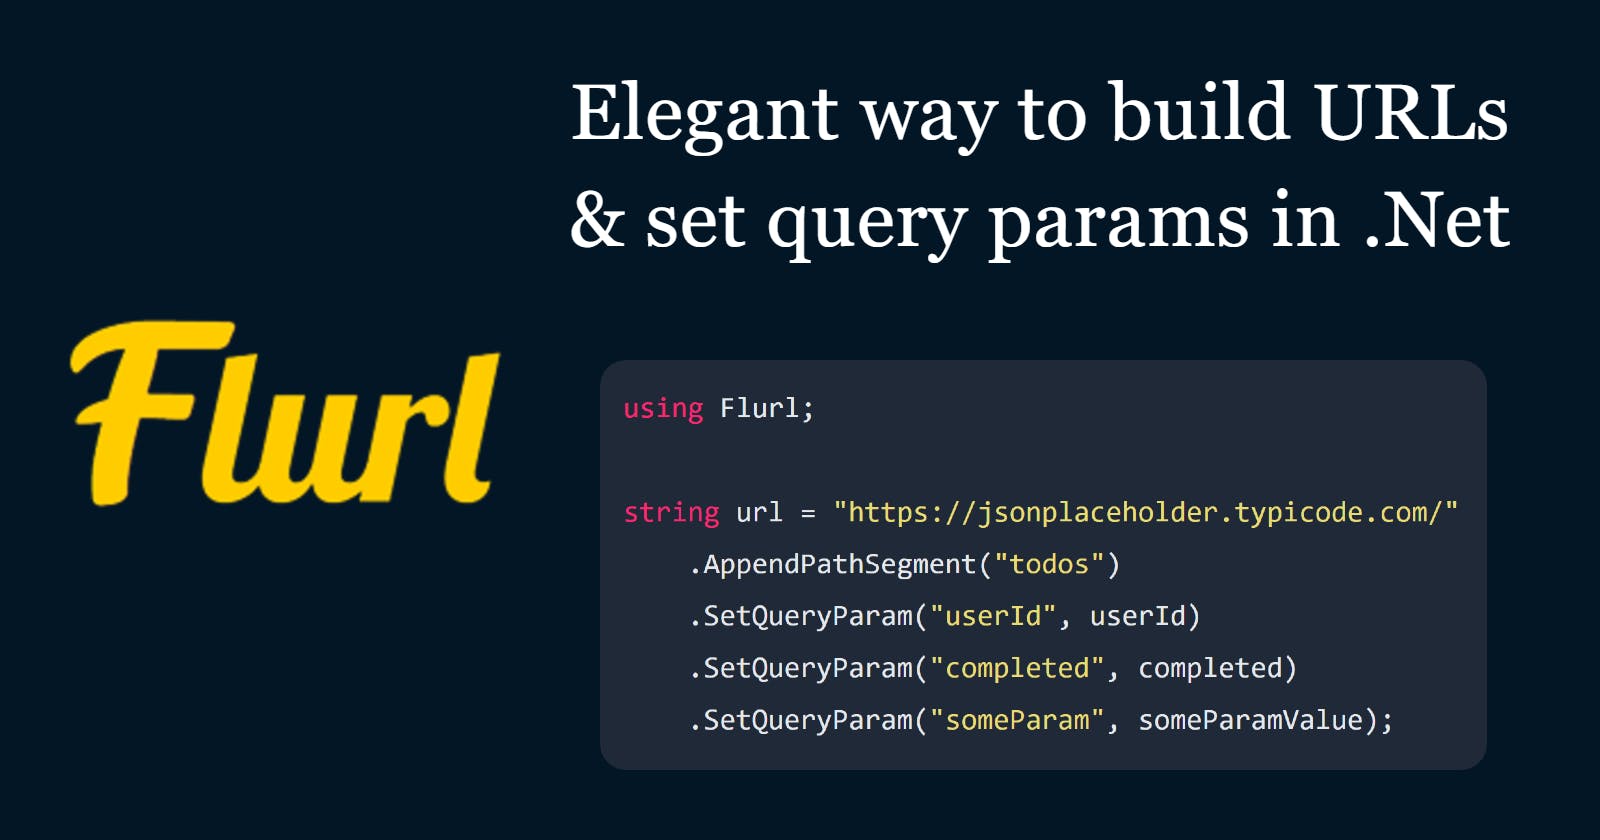 Flurl - The elegant way to build URLs & set query params in .Net